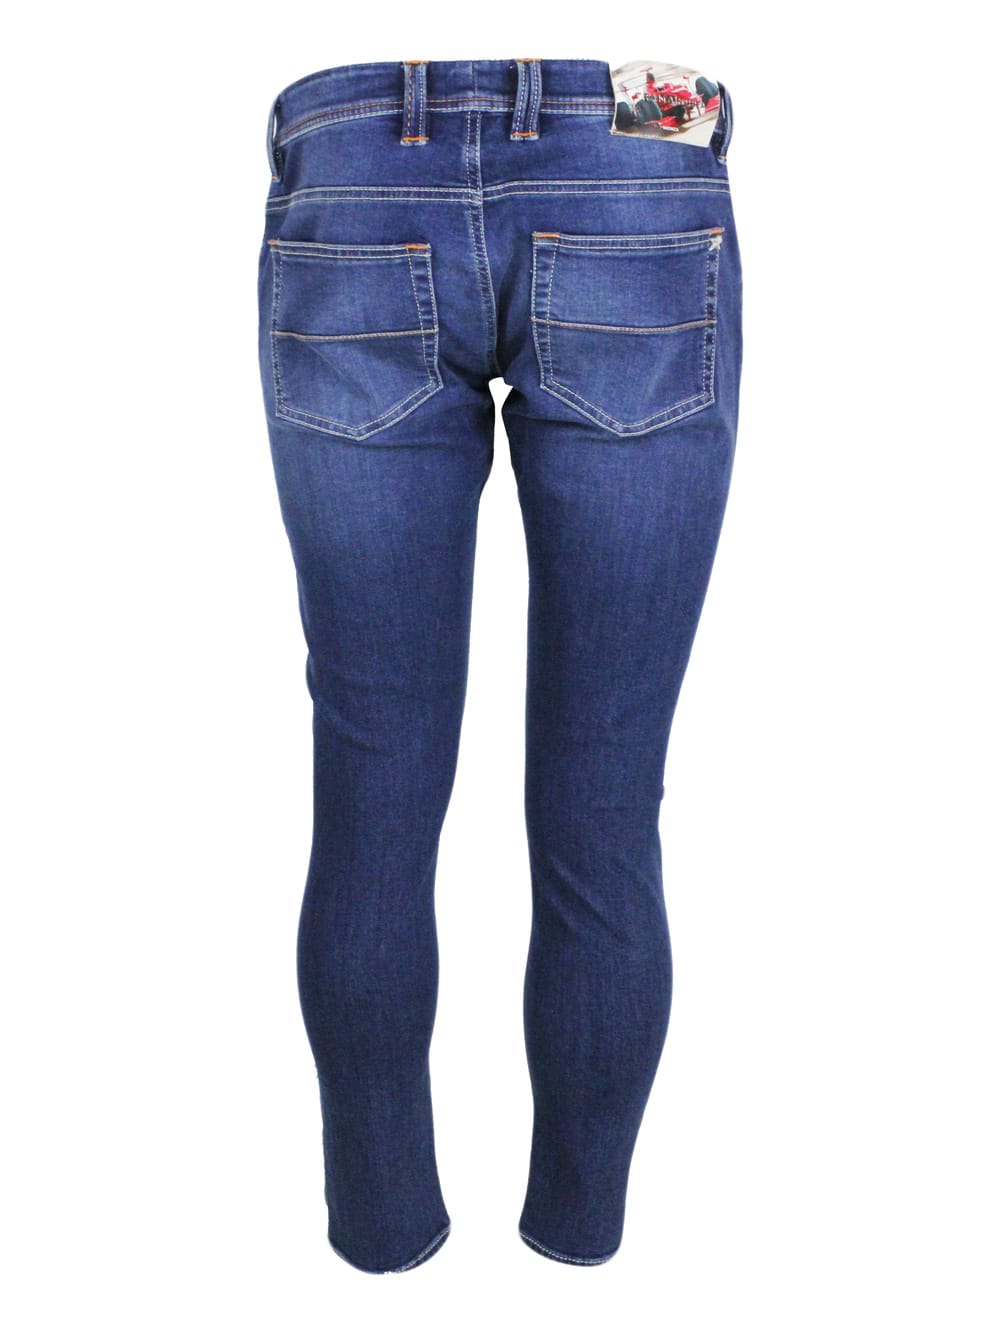 Shop Sartoria Tramarossa Leonardo Zip Monza Trousers In 5-pocket Super Stretch Selvedge Denim With Contrasting Color Tailored